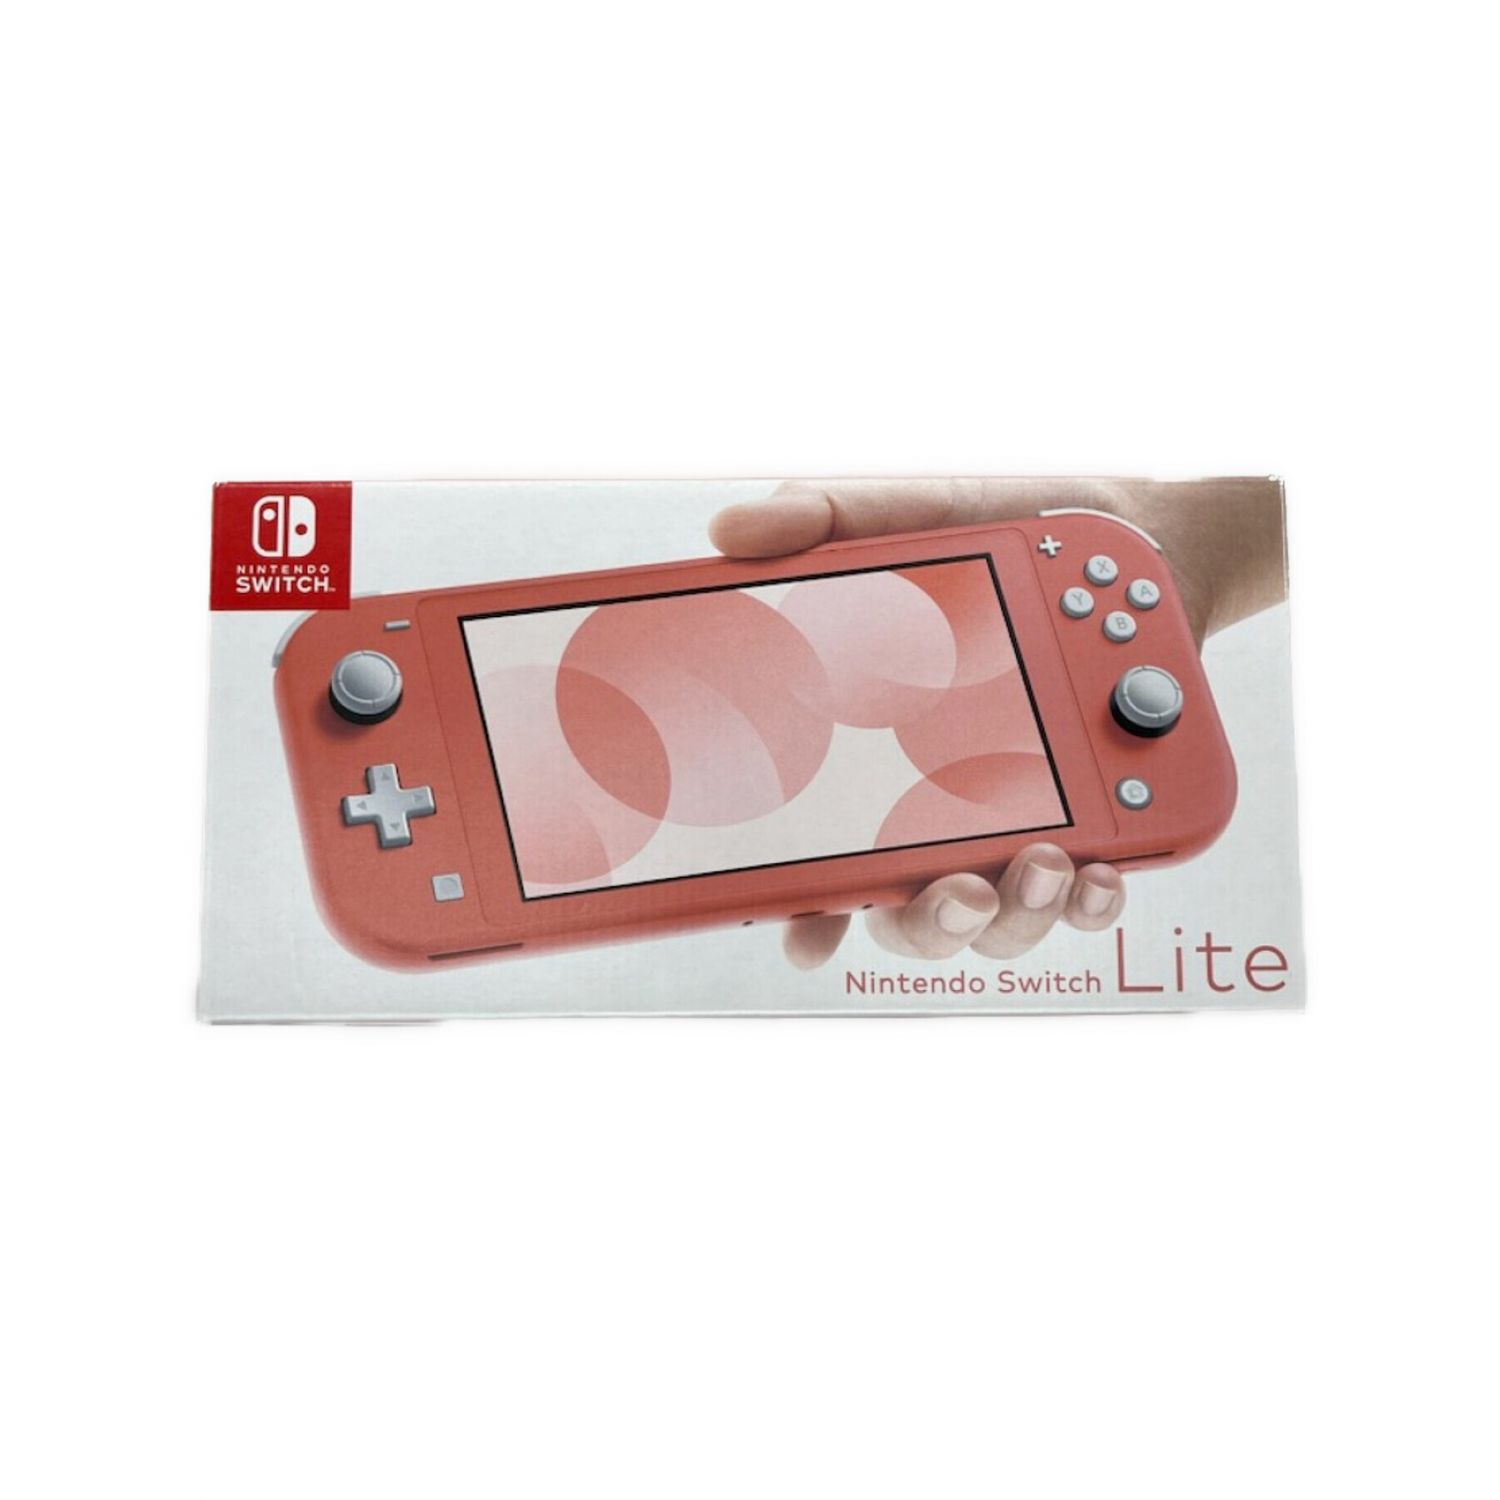 Nintendo (ニンテンドウ) Nintendo Switch Lite ピンク HDH-001 